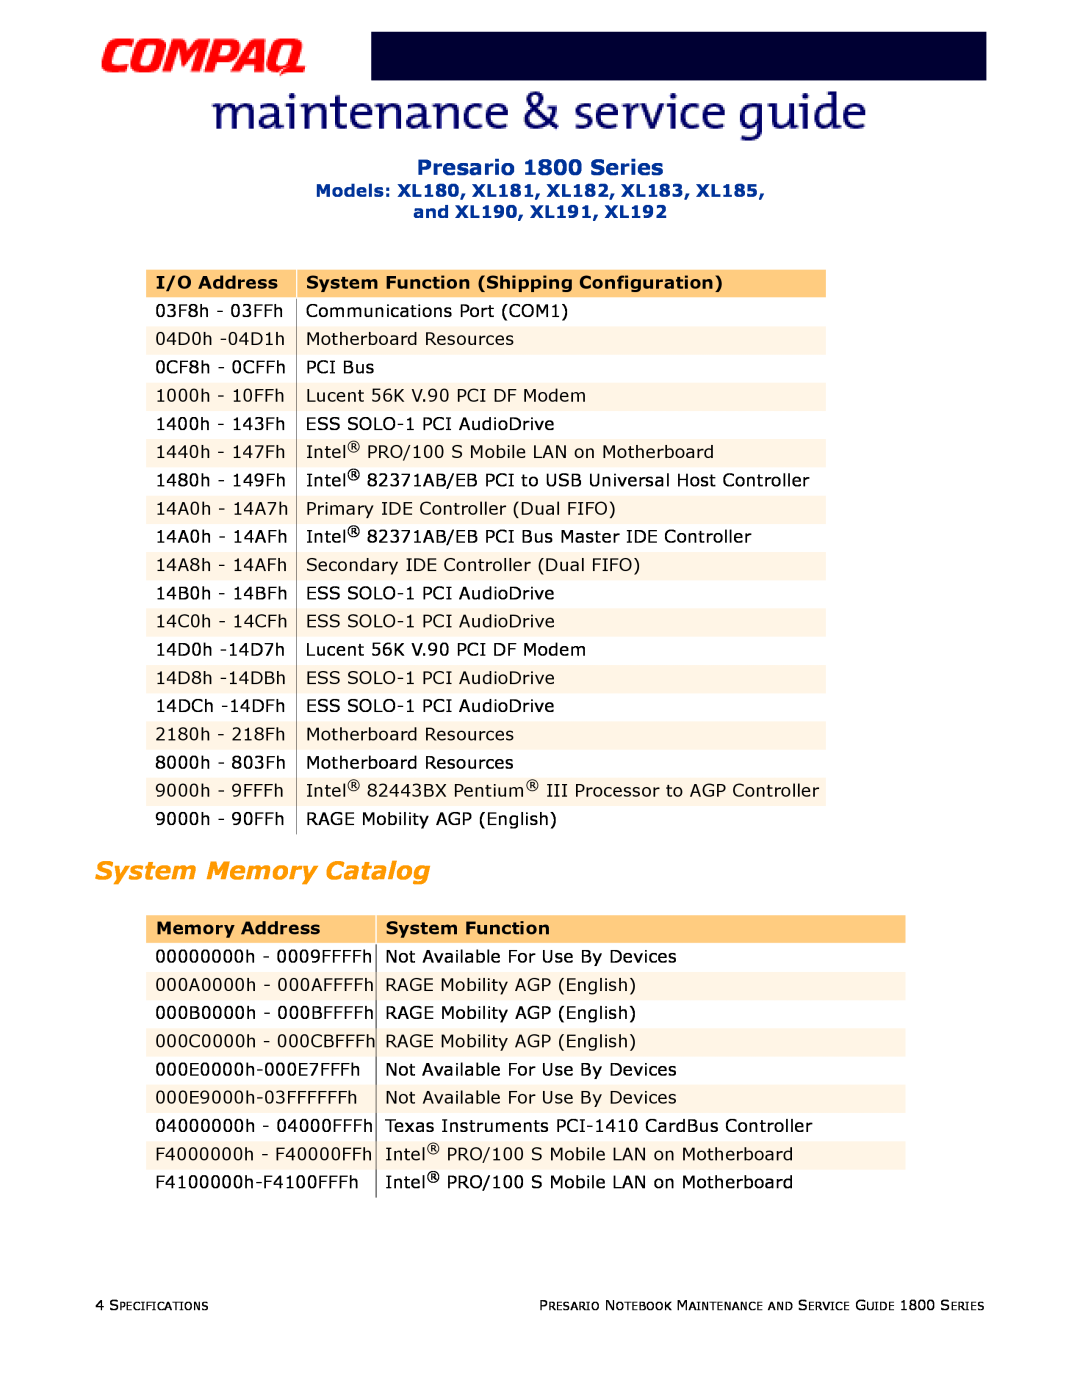 Compaq XL192, XL190, XL180 System Memory Catalog, Presario 1800 Series, I/O Address, System Function Shipping Configuration 